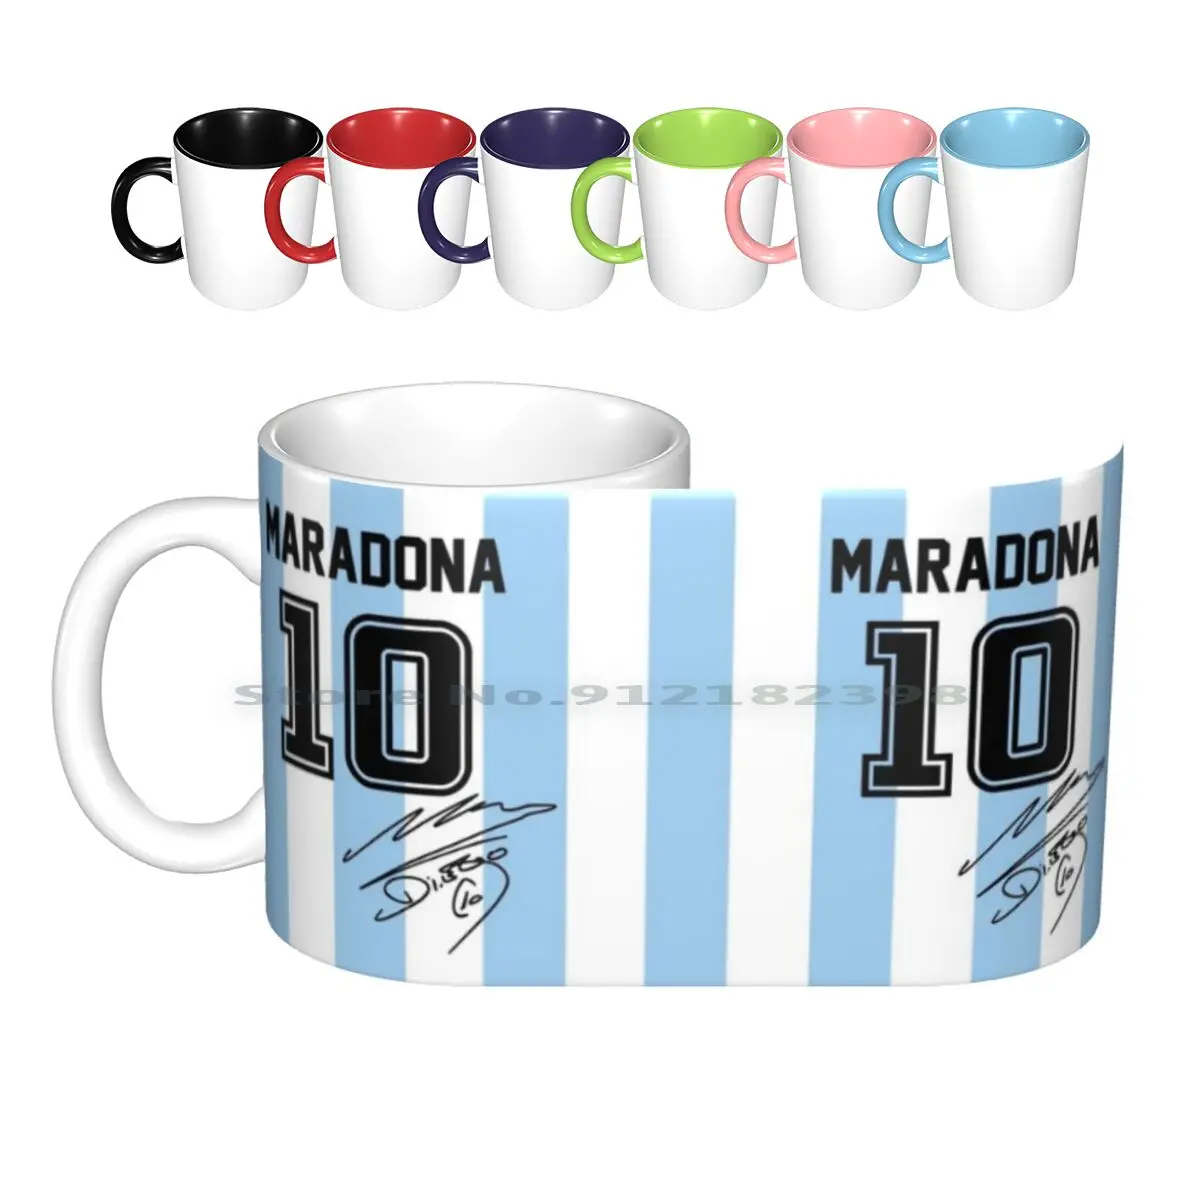 Maradona Jersey Ceramic Mugs Coffee Cups Milk Tea Mug Maradona Diego Diego Maradona Diego Maradona Ten Ten Argentina N10